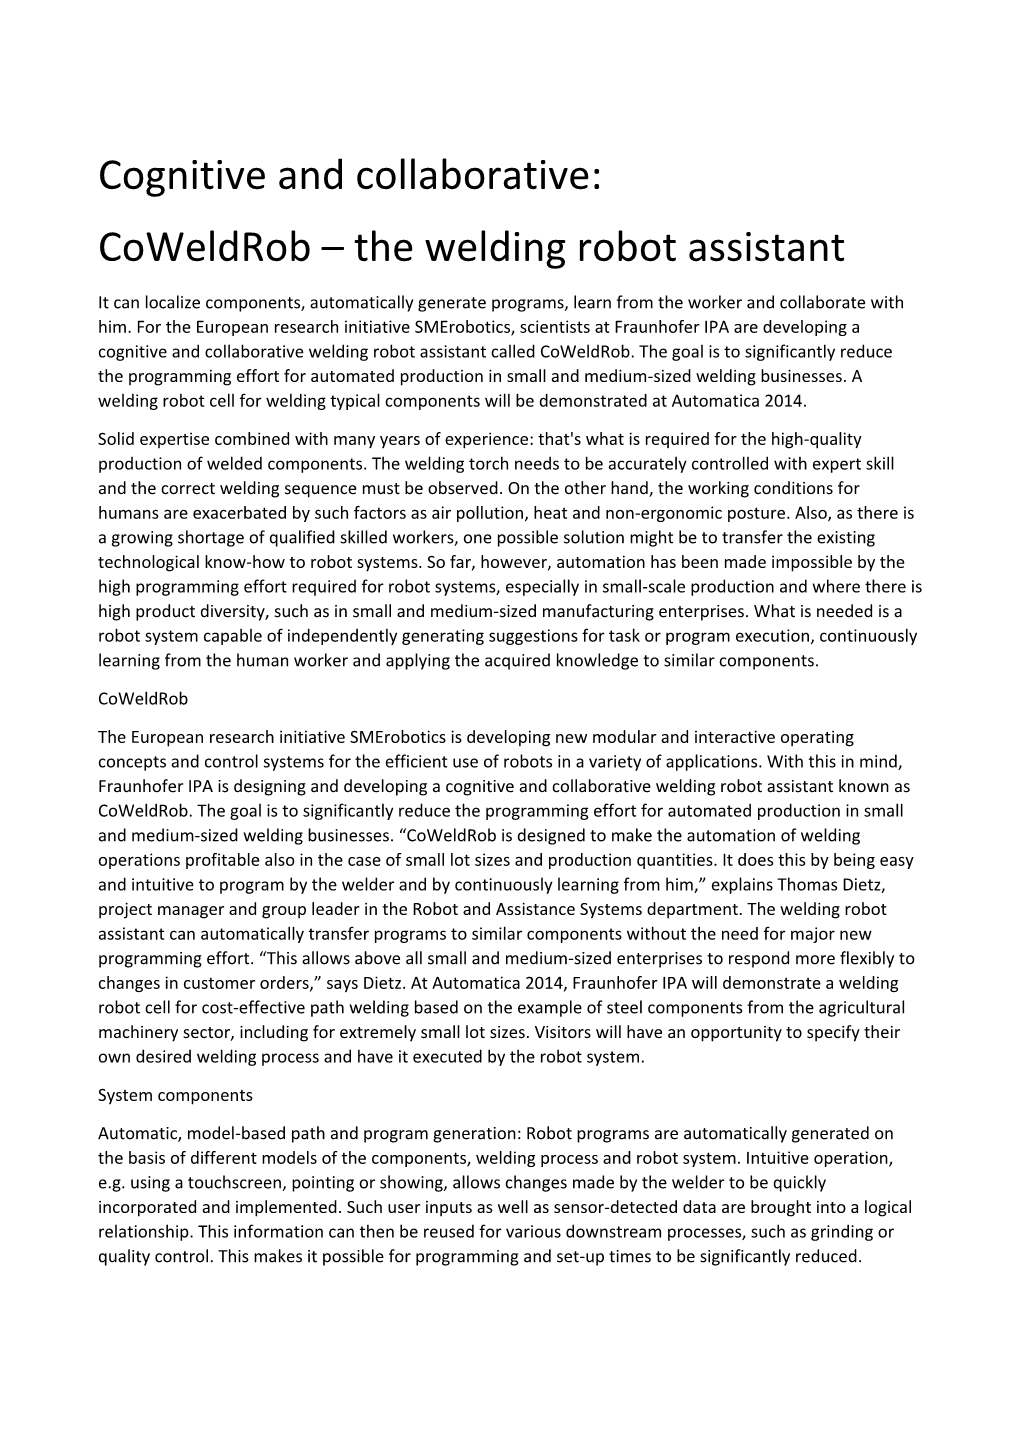 Coweldrob the Welding Robot Assistant